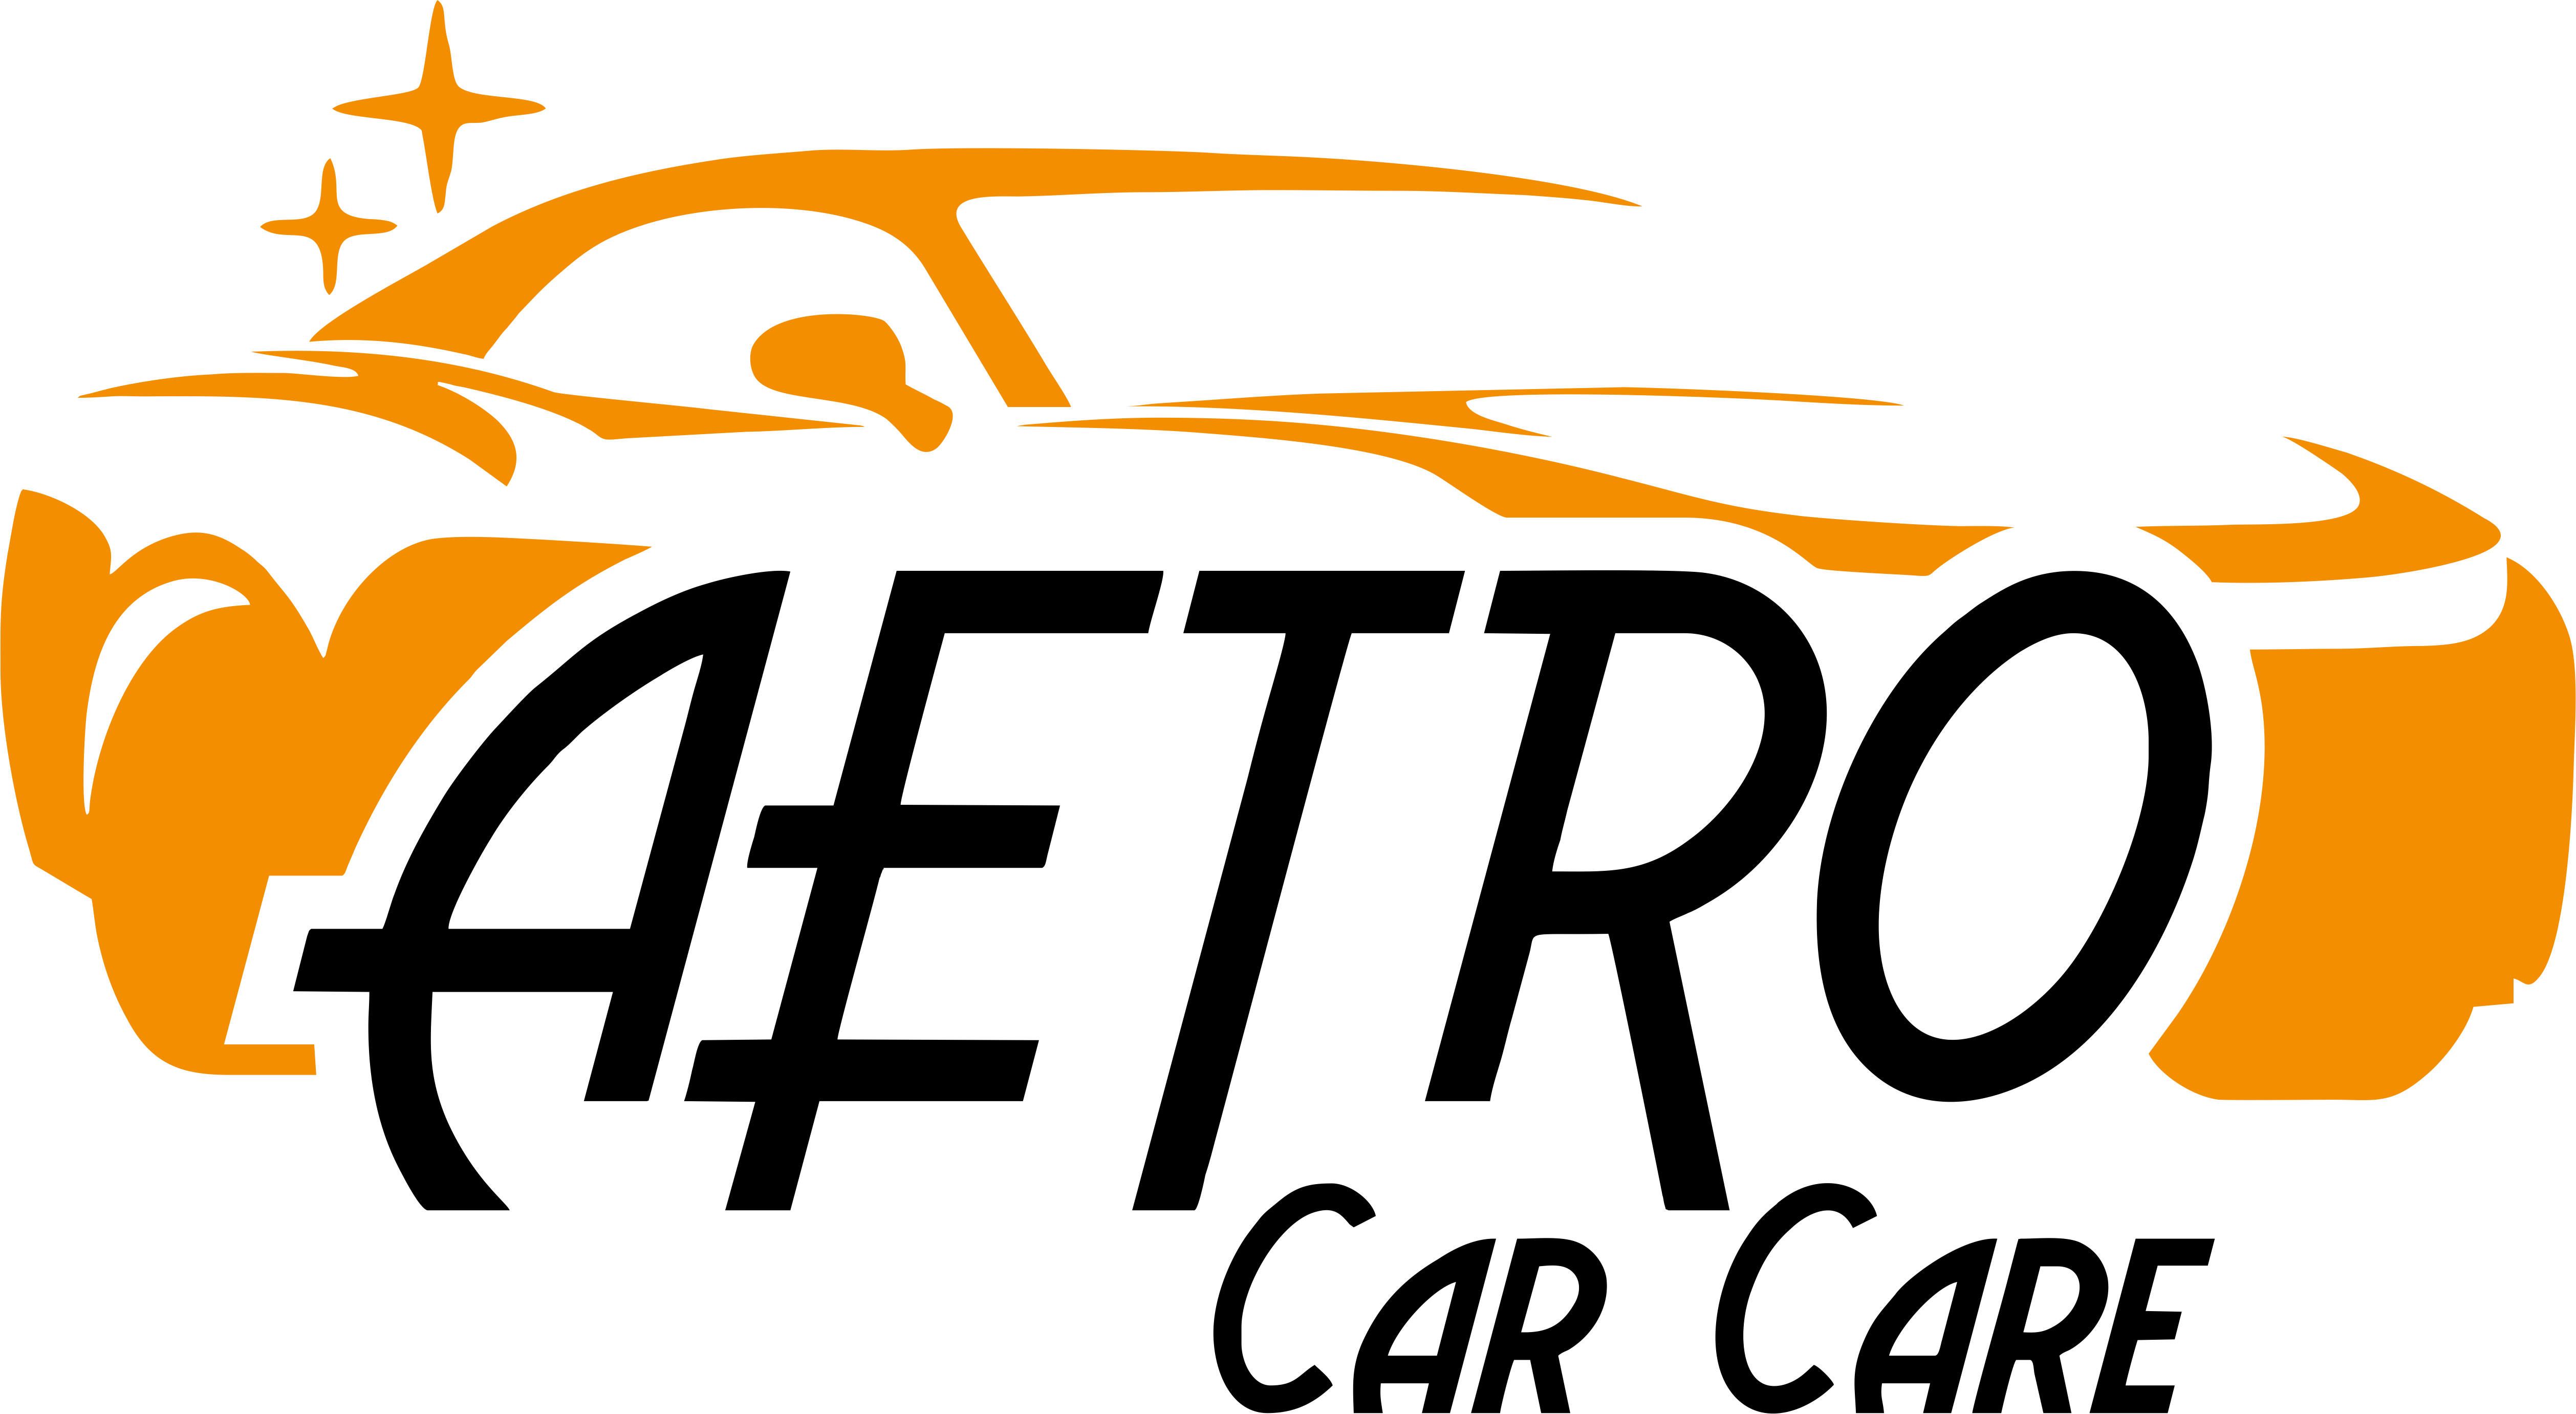 AETRO Car care Logo